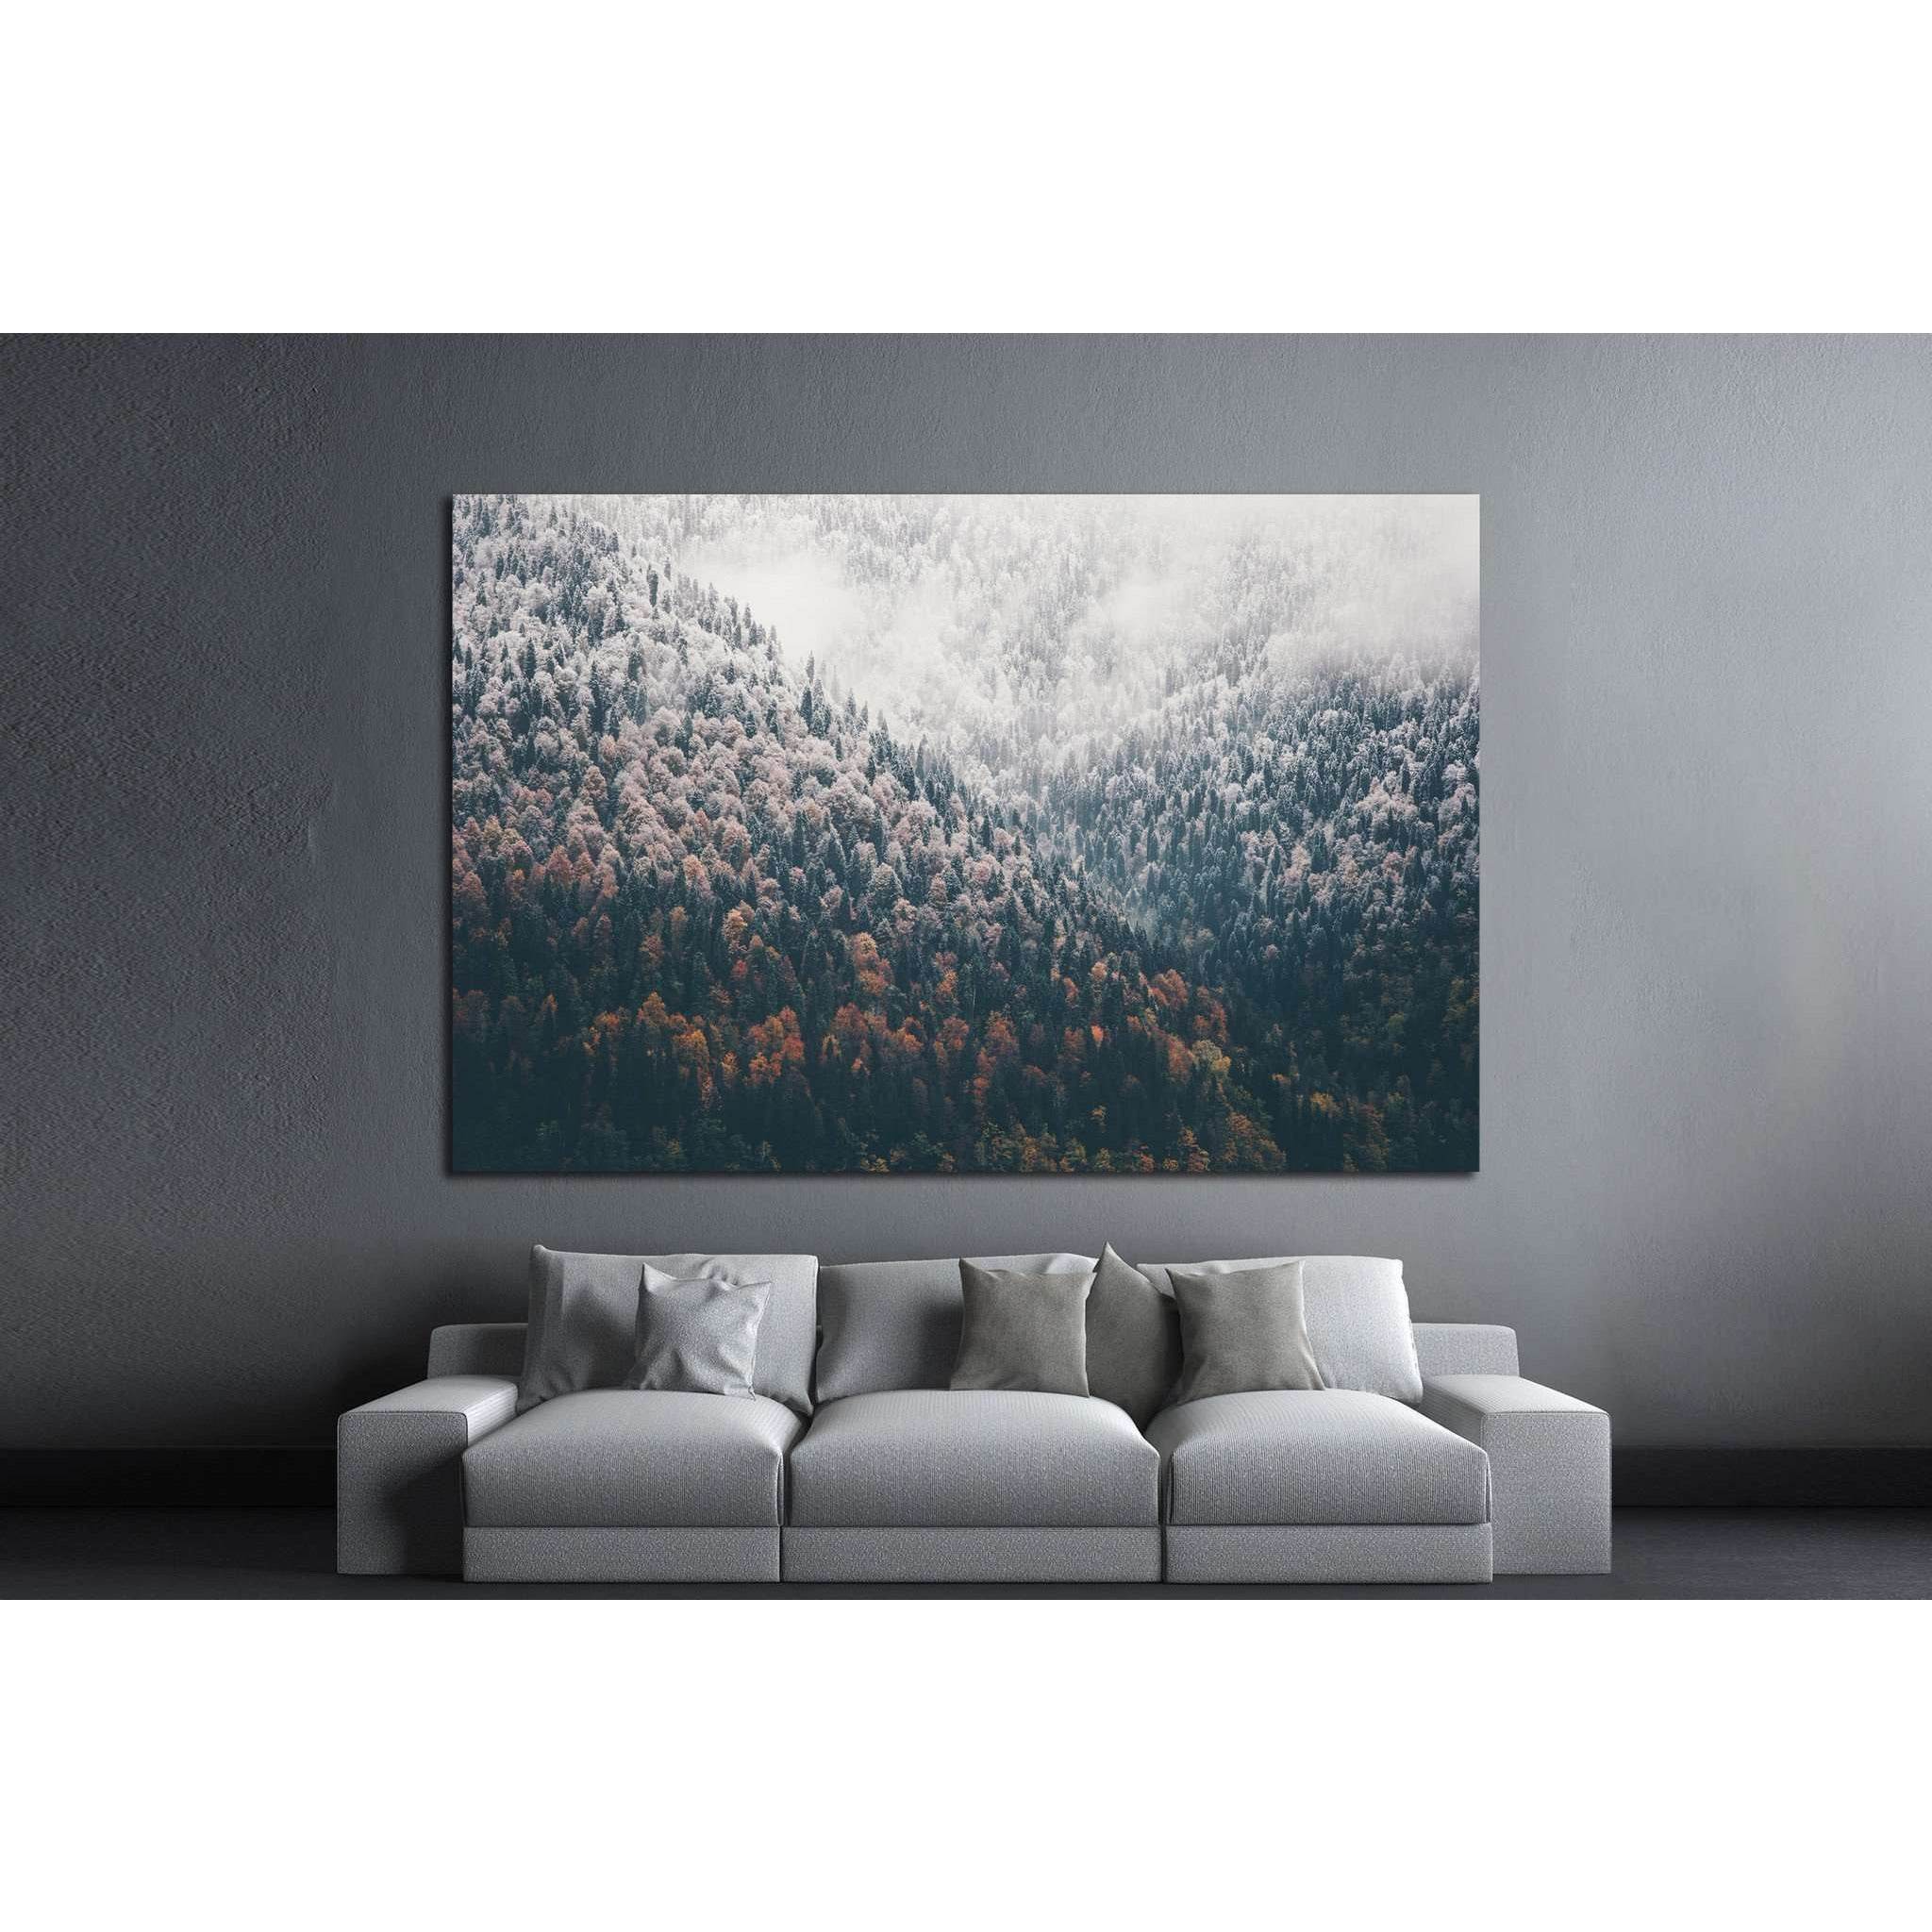 Foggy Autumn Coniferous Forest Landscape №1320 Ready to Hang Canvas Print